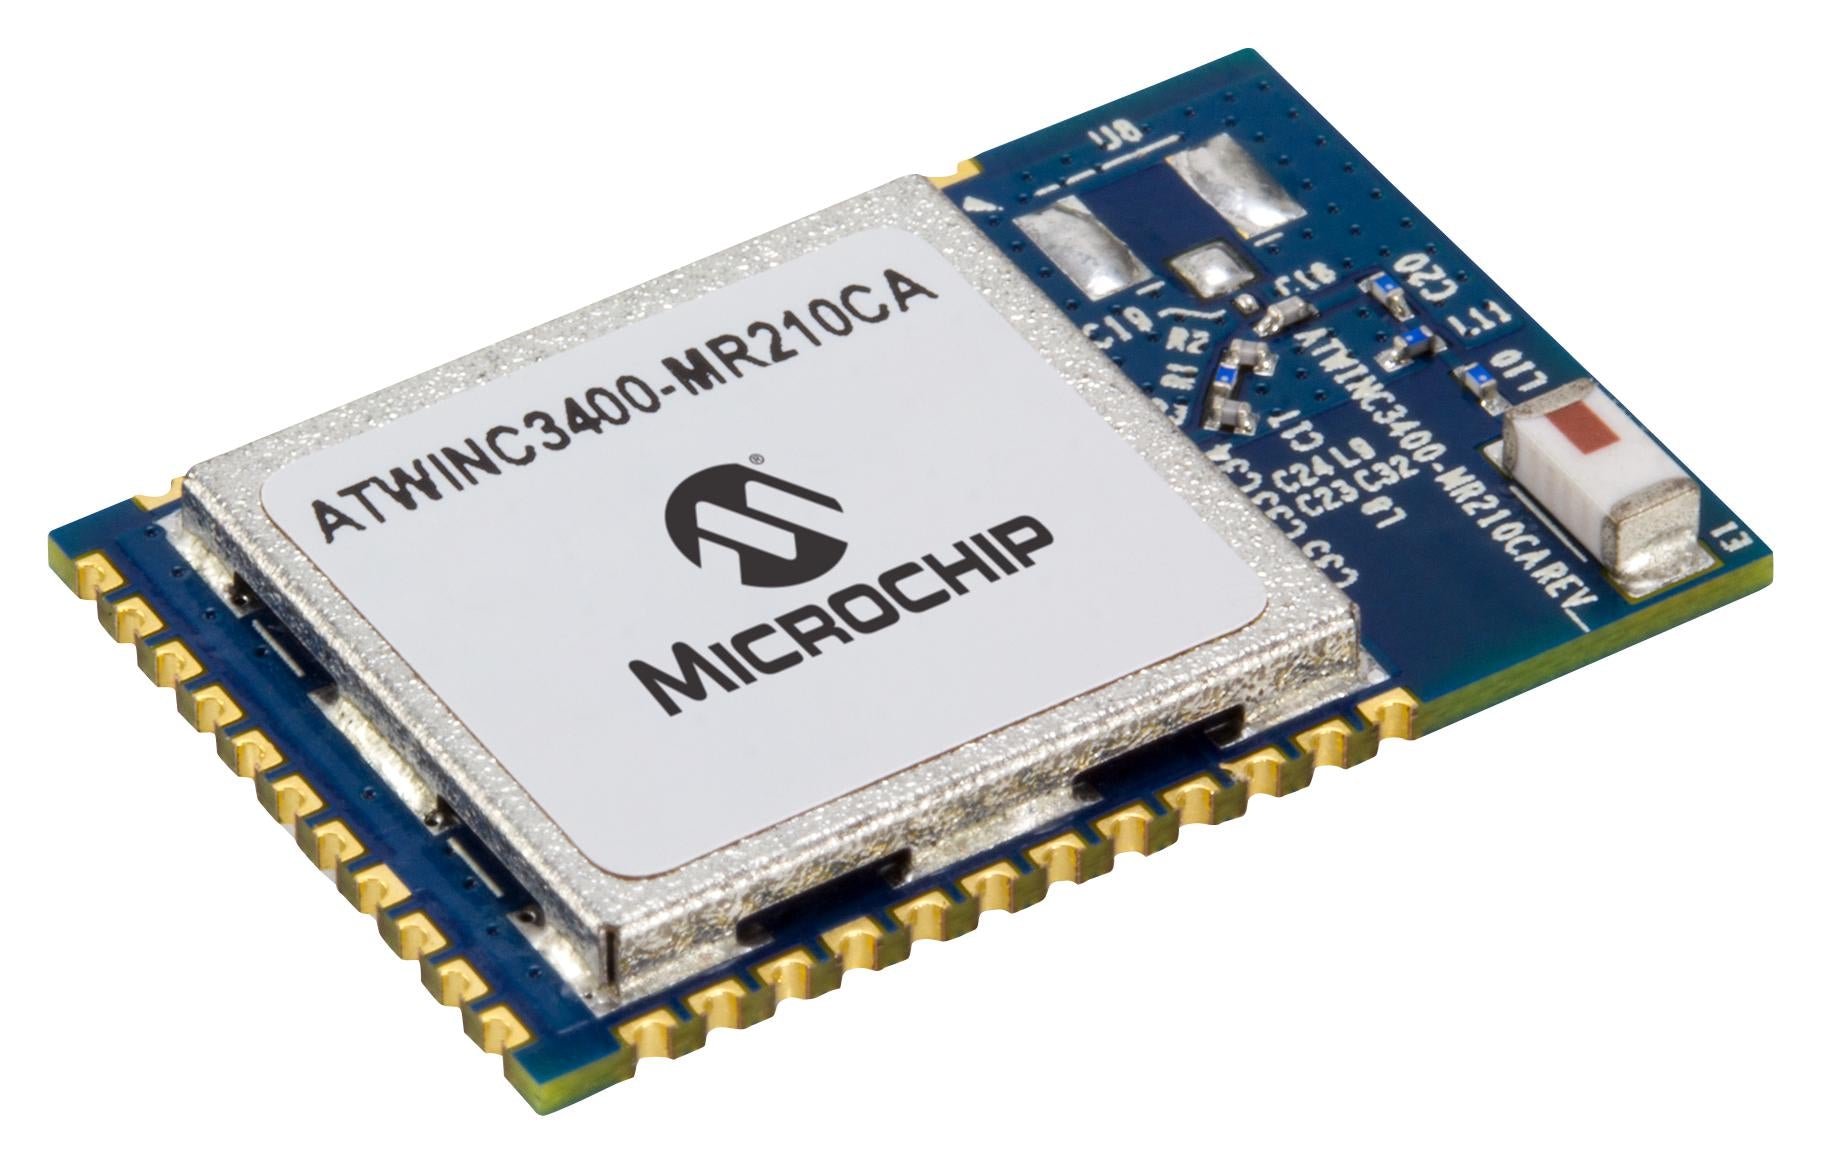 ATWINC3400-MR210UA122 N/W CONTROLLER MODULE W/ BLUETOOTH, 4.0 MICROCHIP